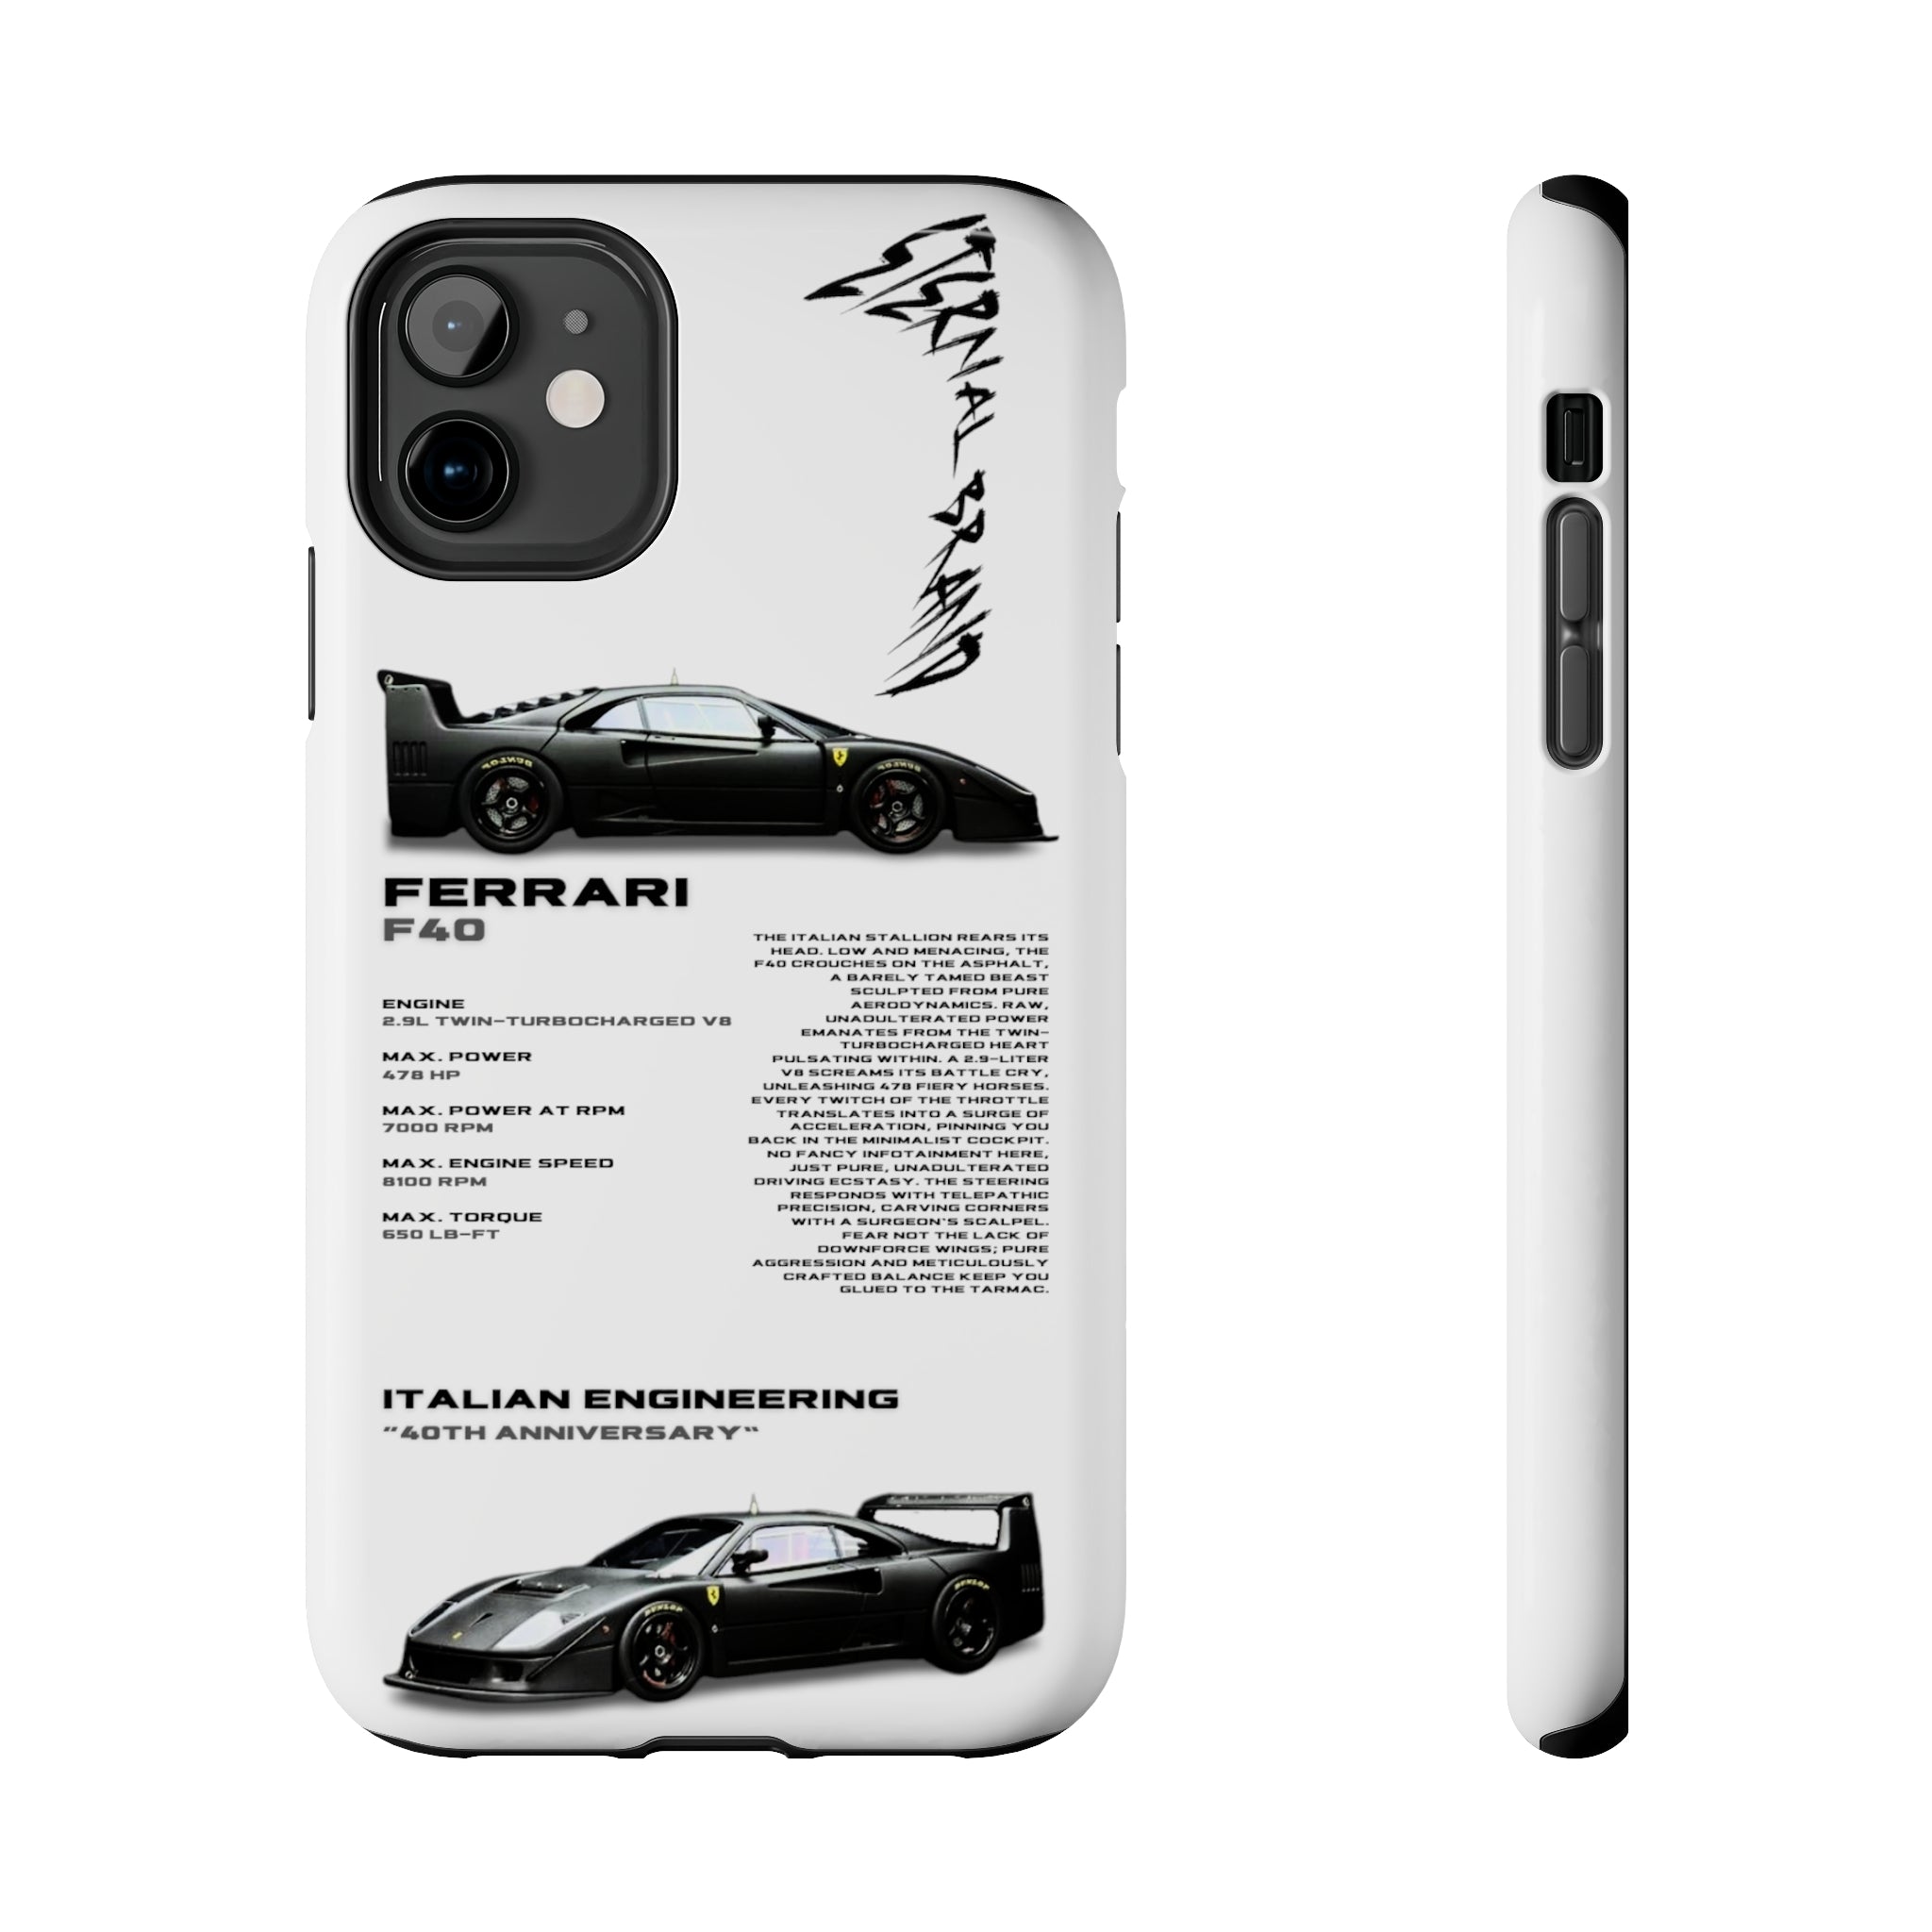 Ferrari F40 "Matte Black"